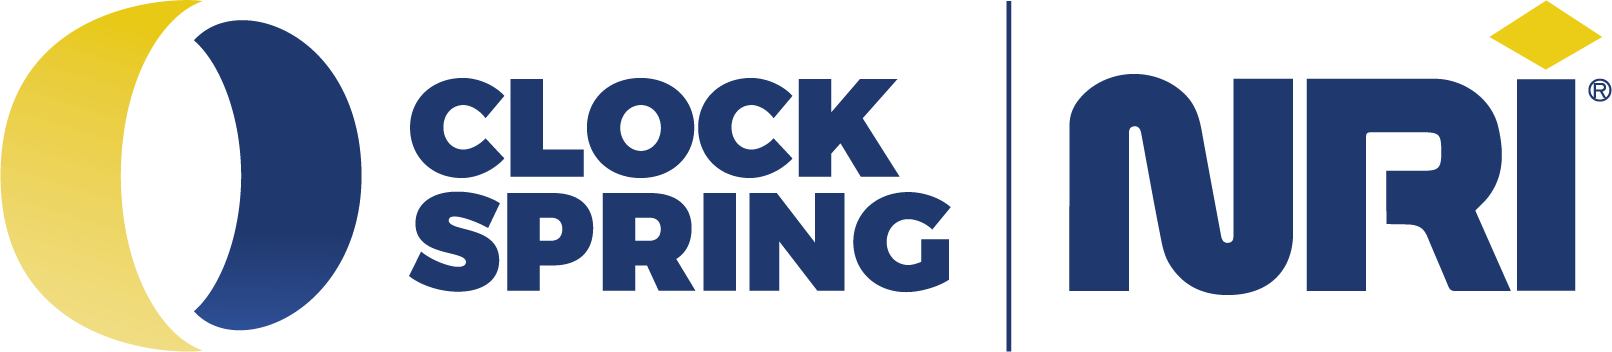 Clock & Spring logo